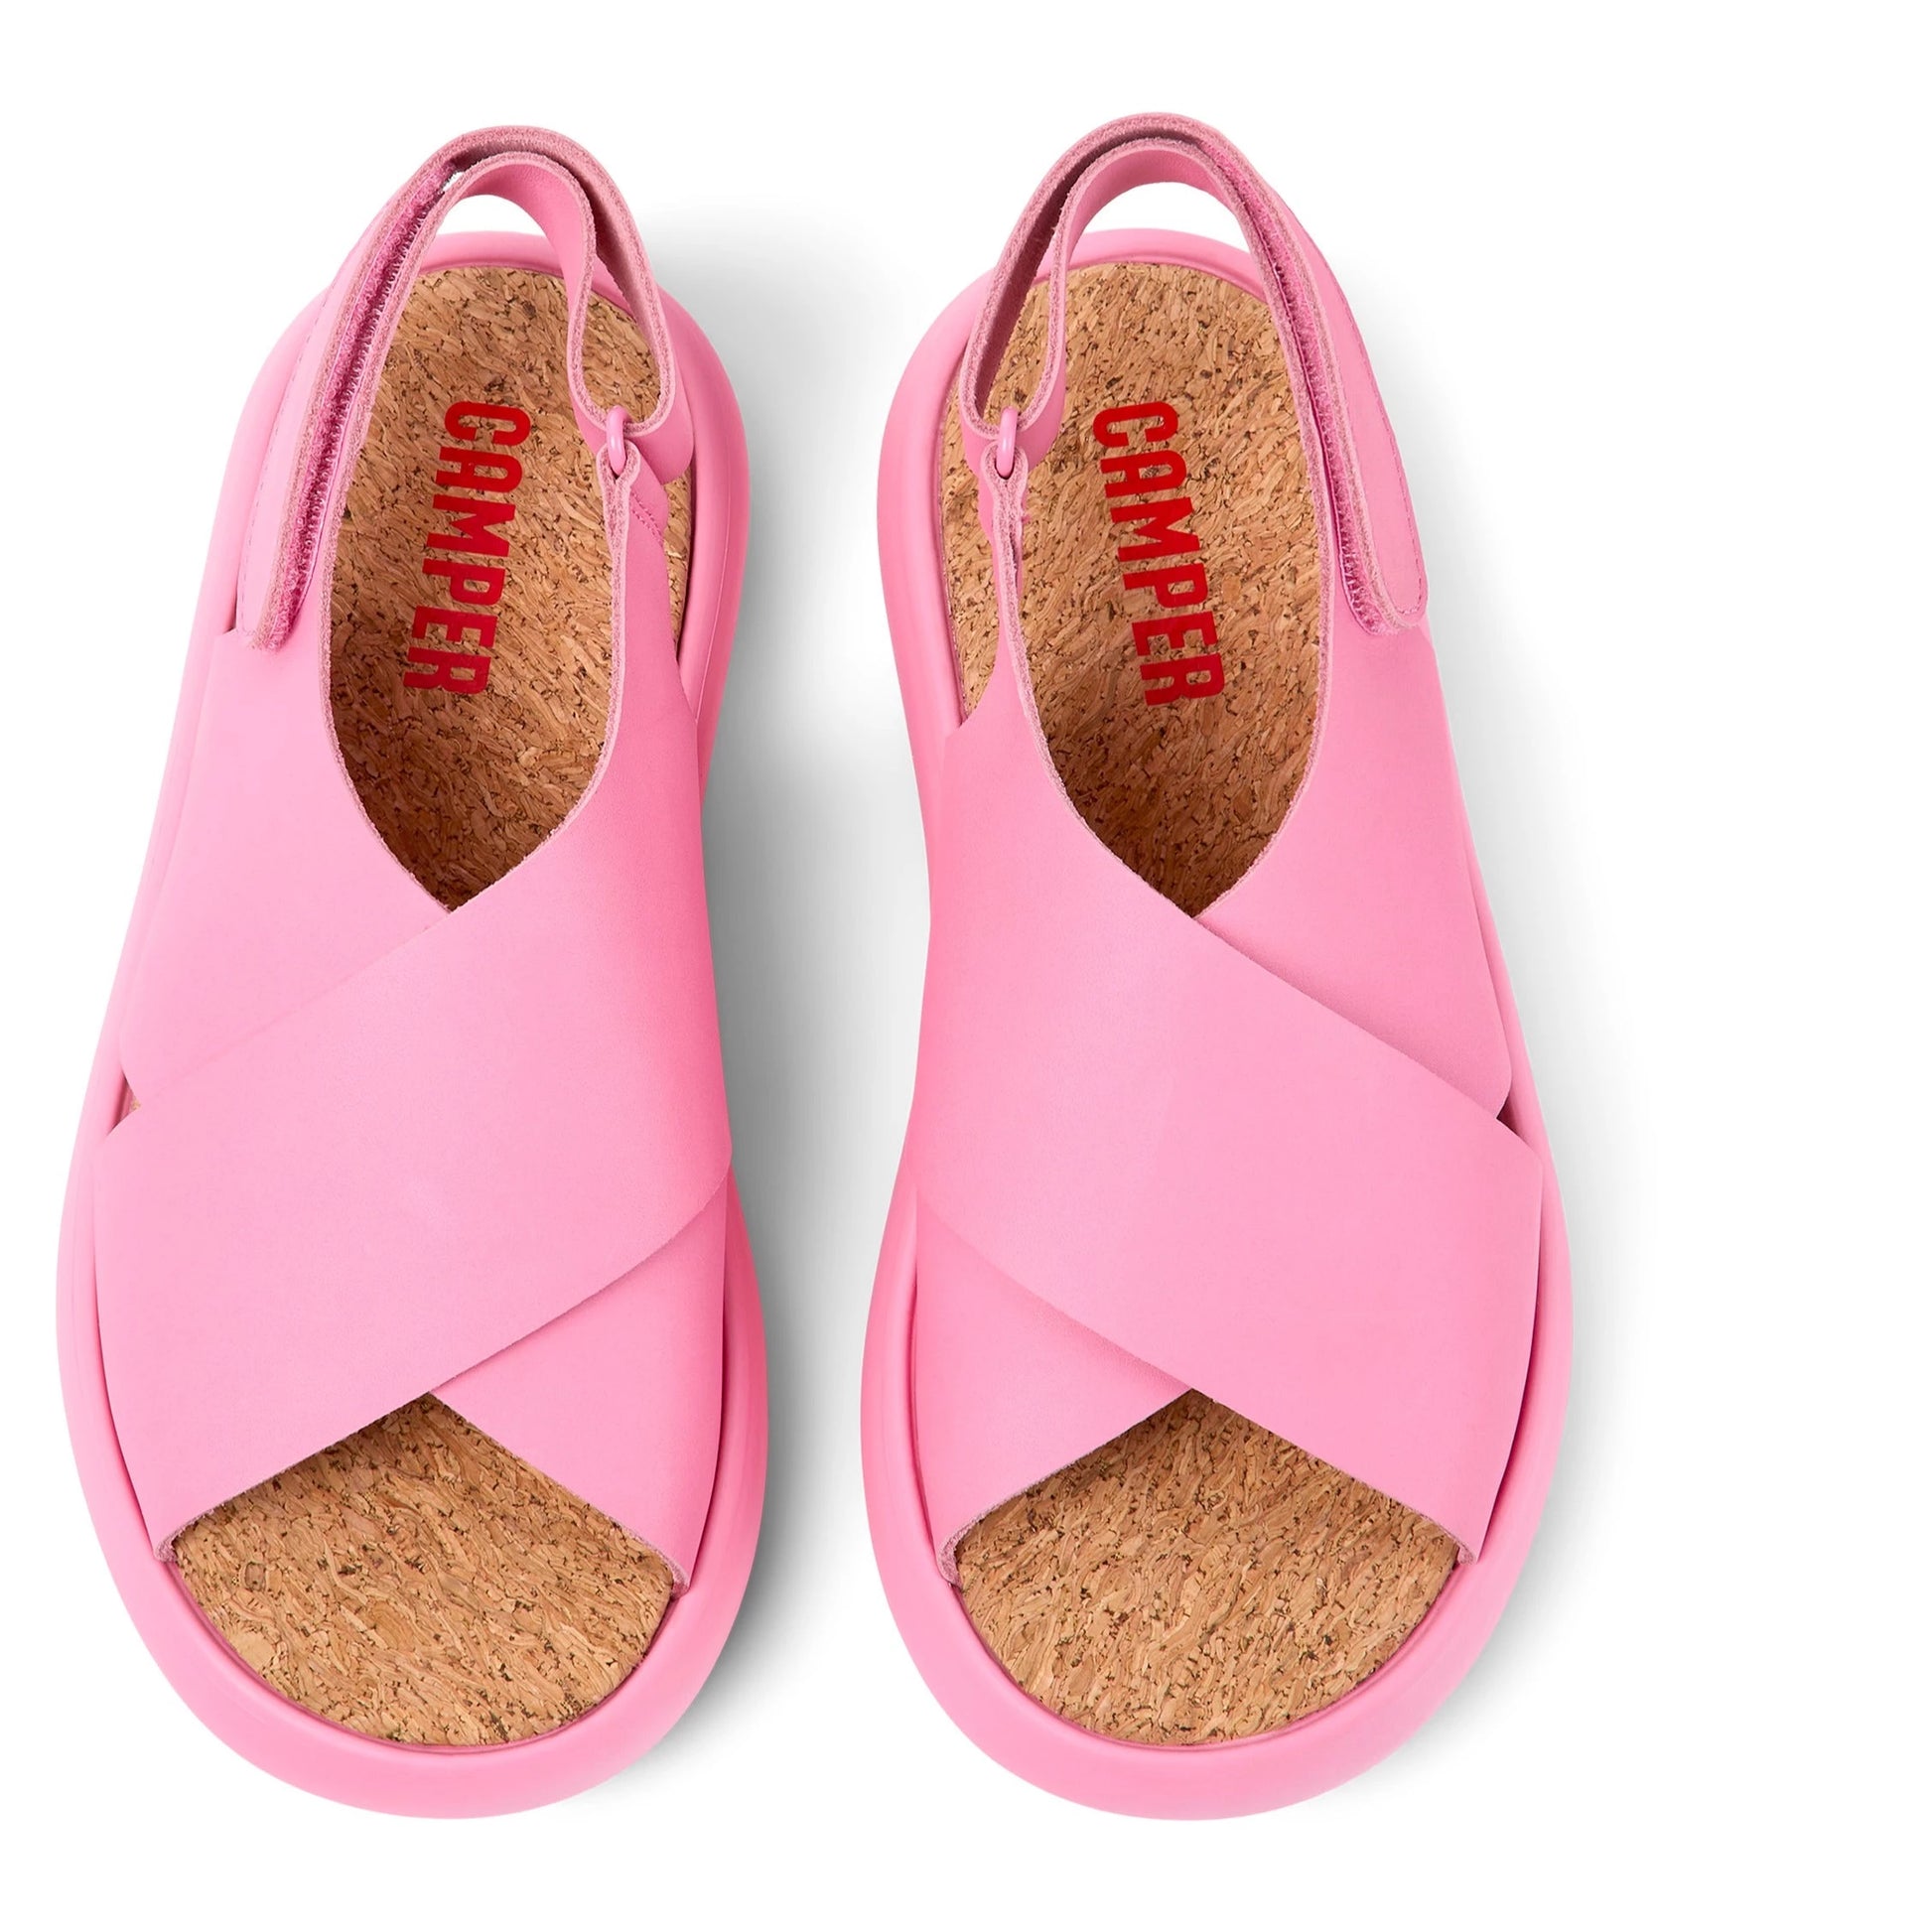 Sandalias De La Marca Camper Para Mujer Modelo Pelotas Flota Sandal En Color Rosa